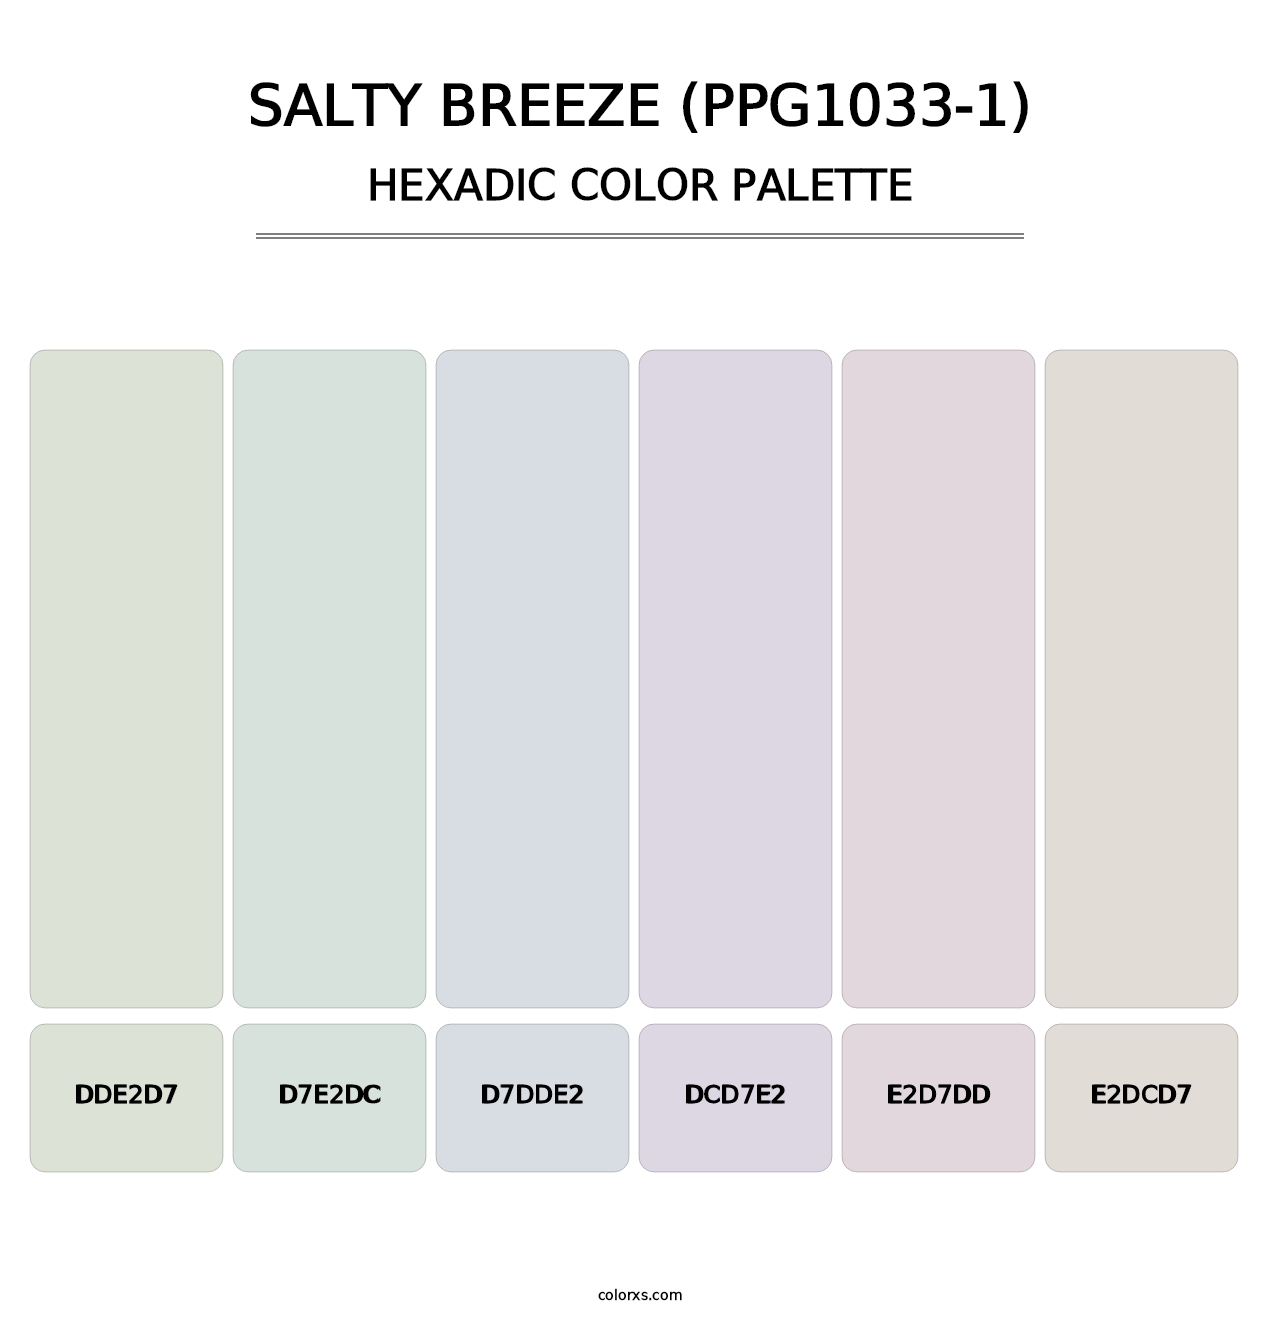 Salty Breeze (PPG1033-1) - Hexadic Color Palette